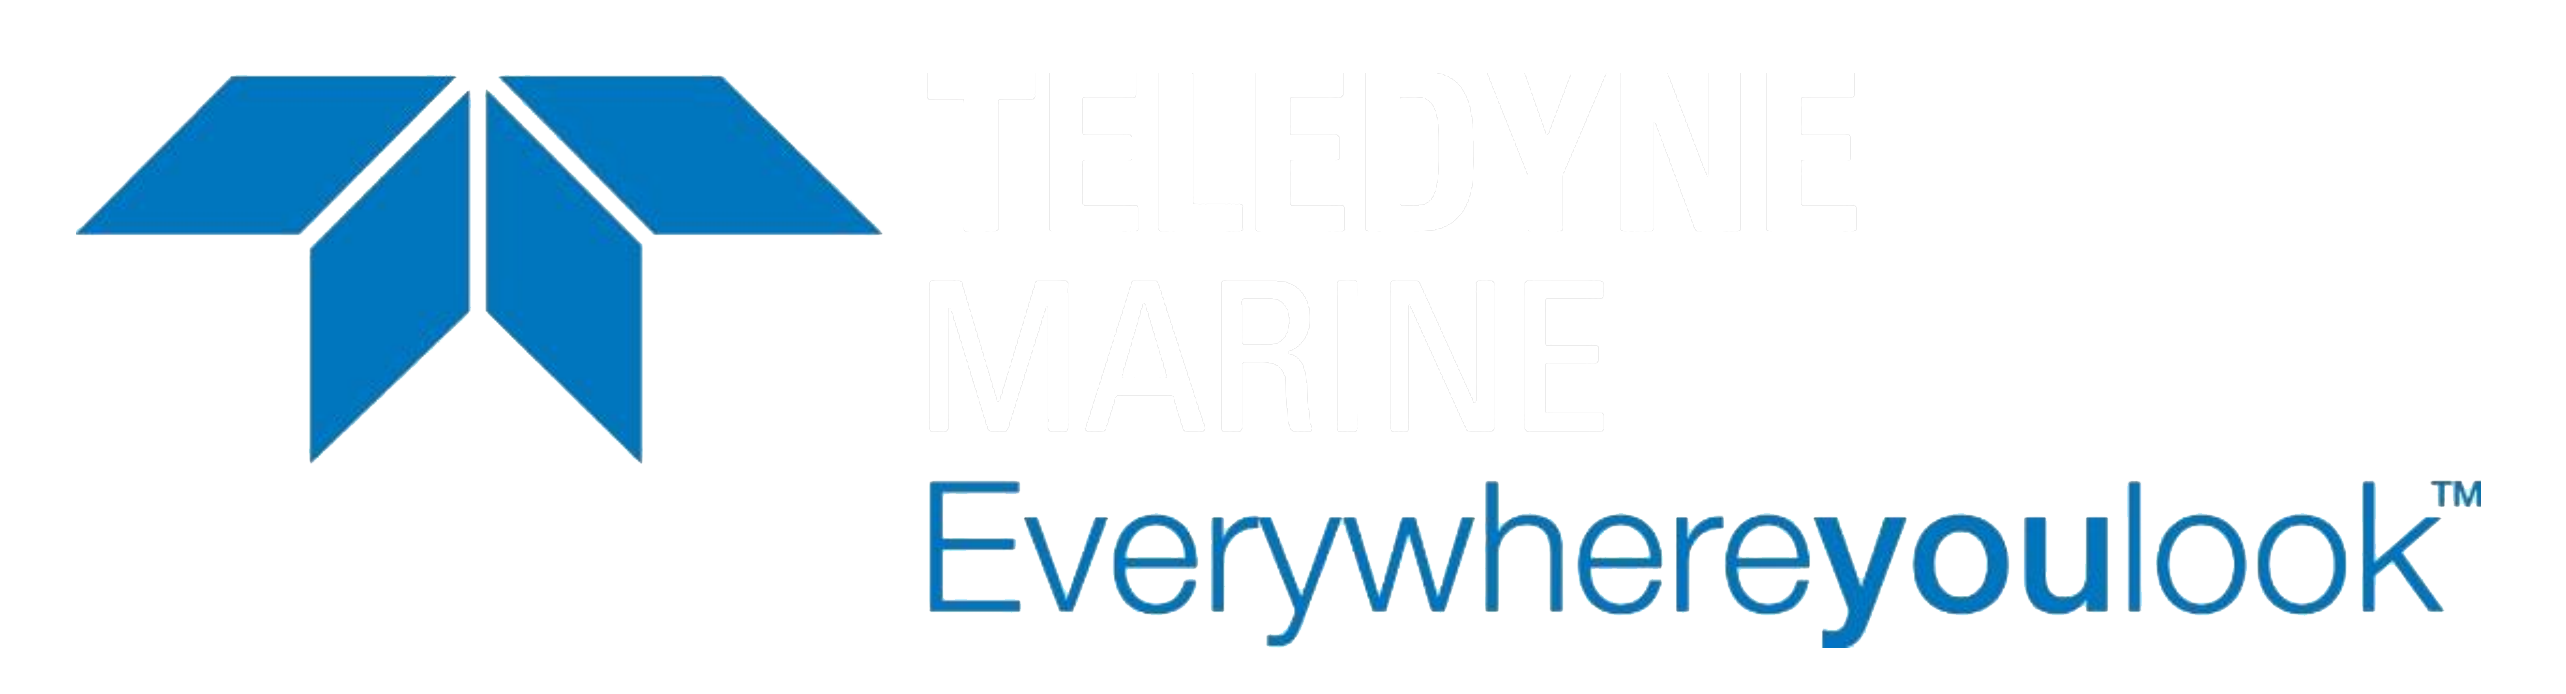 Teledyne Marine Vehicles